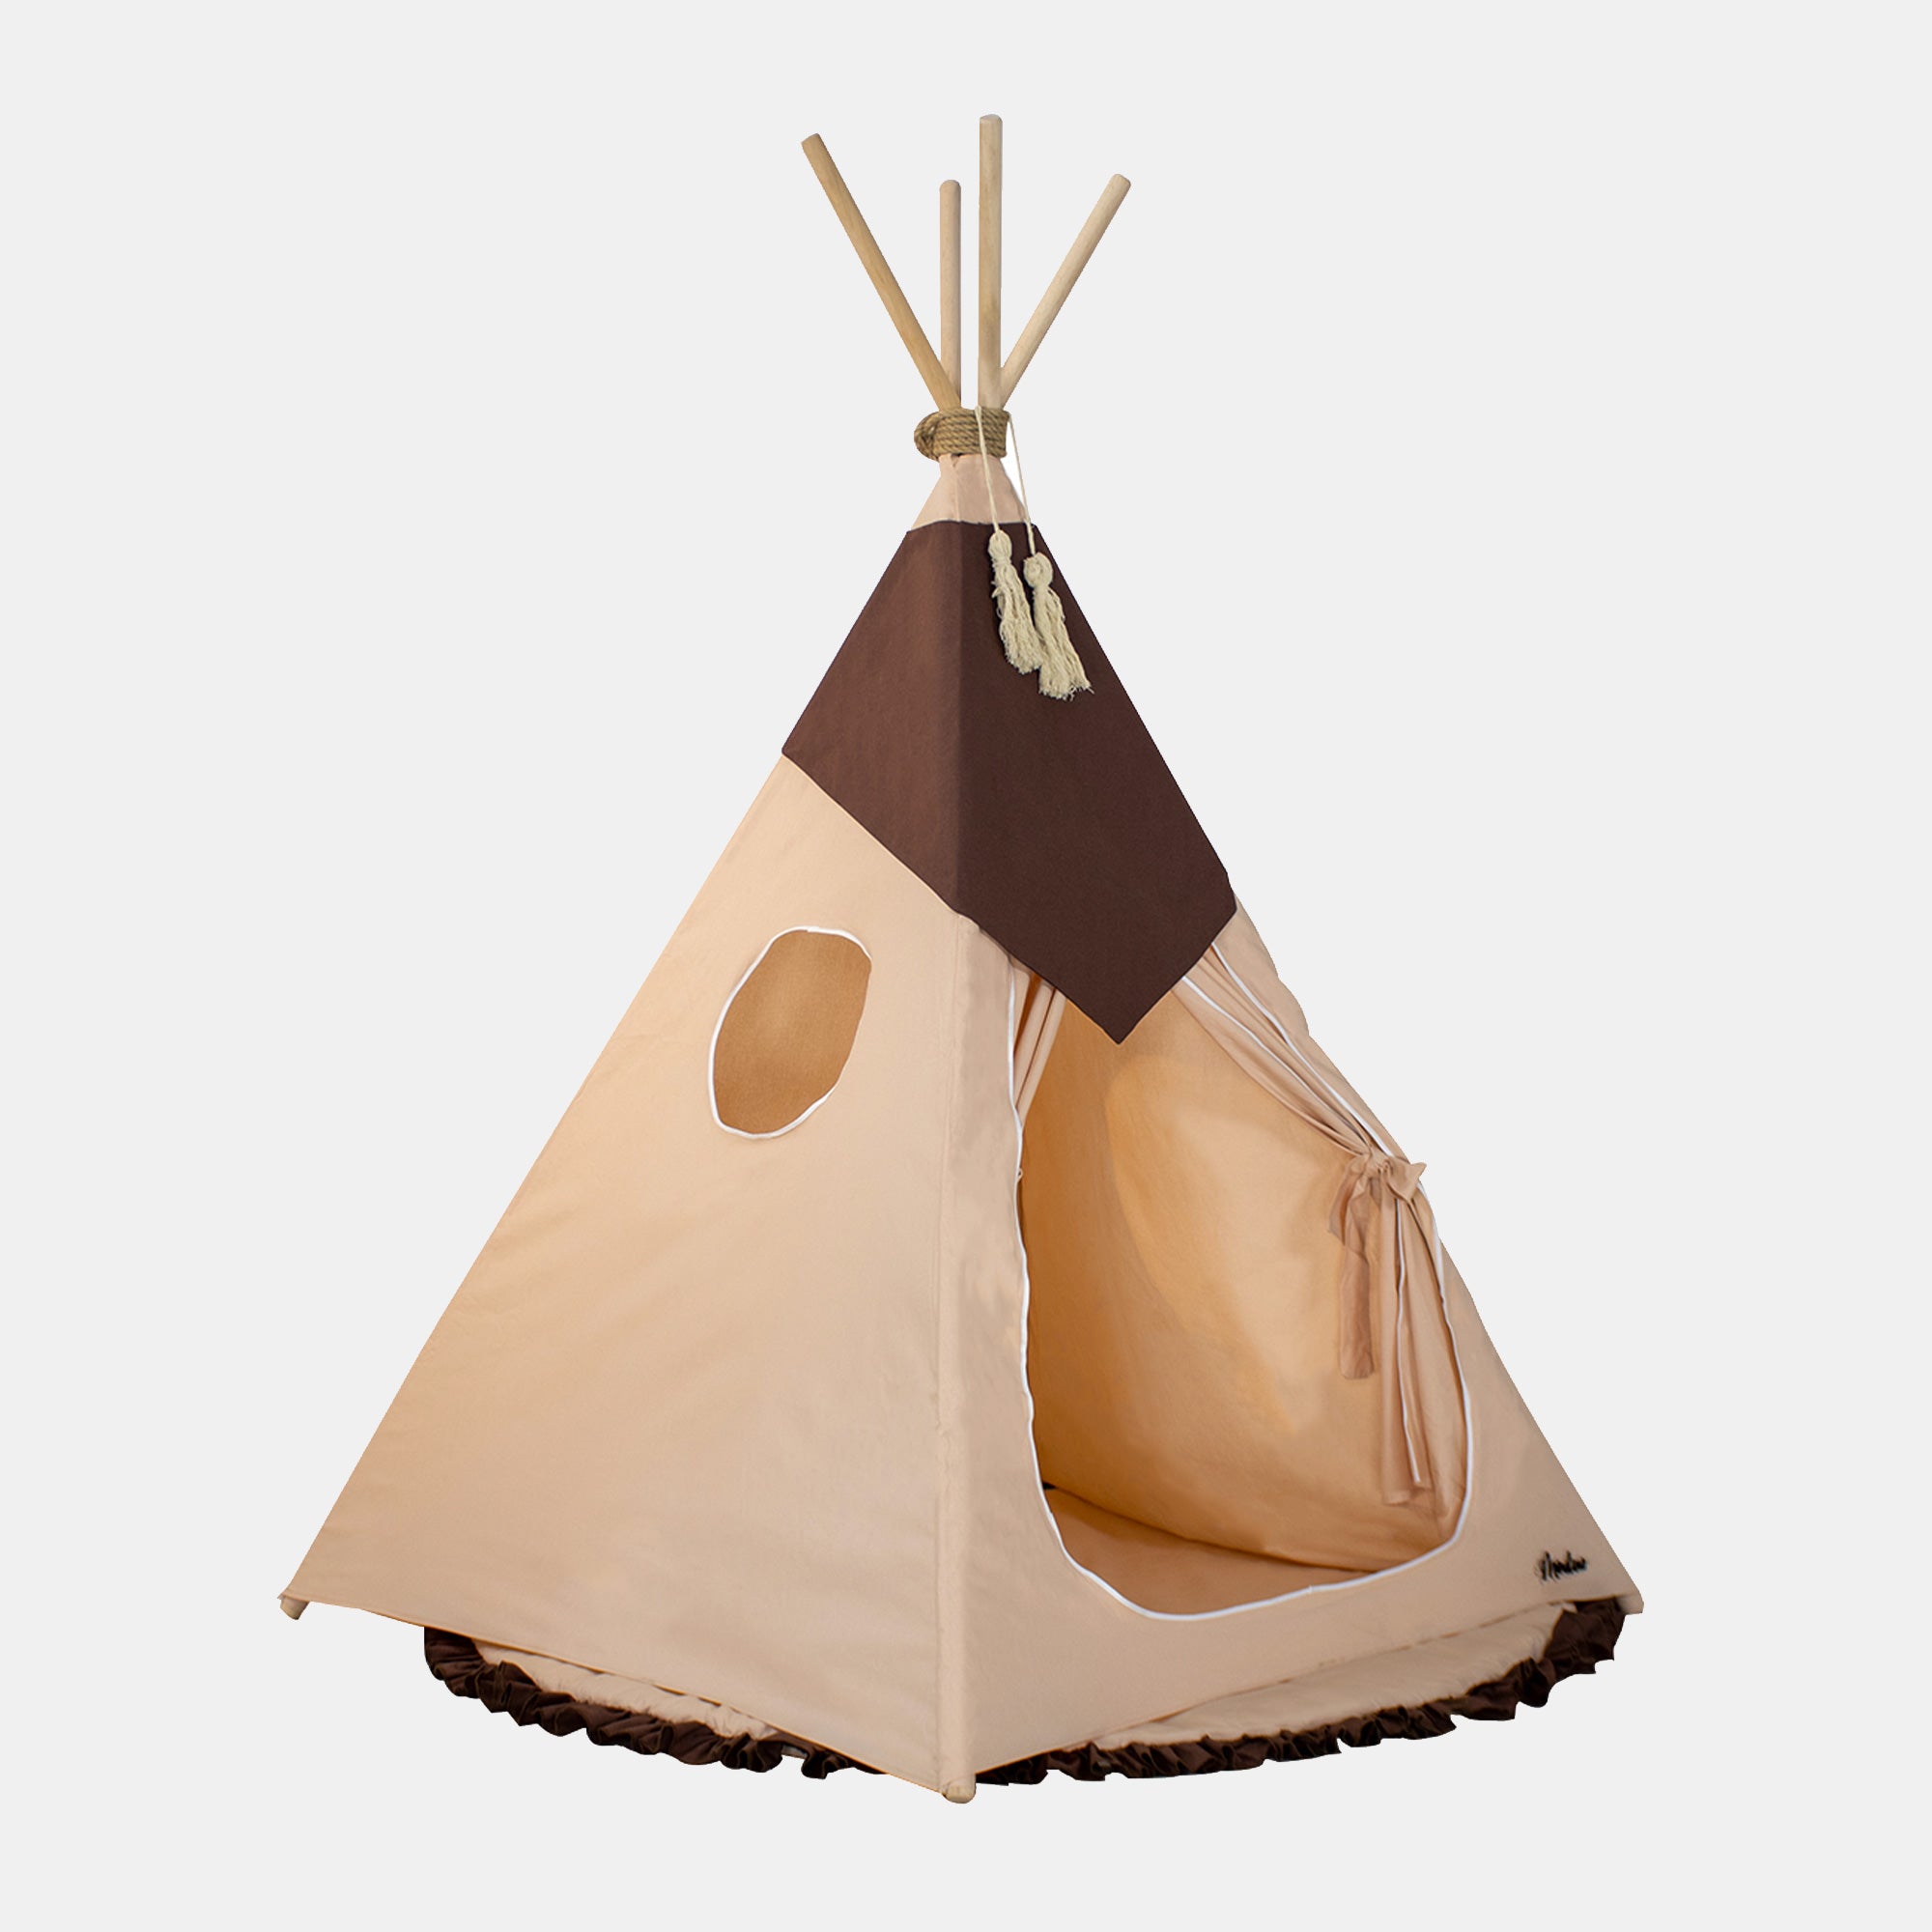 Tenda Teepee per bambini in Stile Nativi Americani